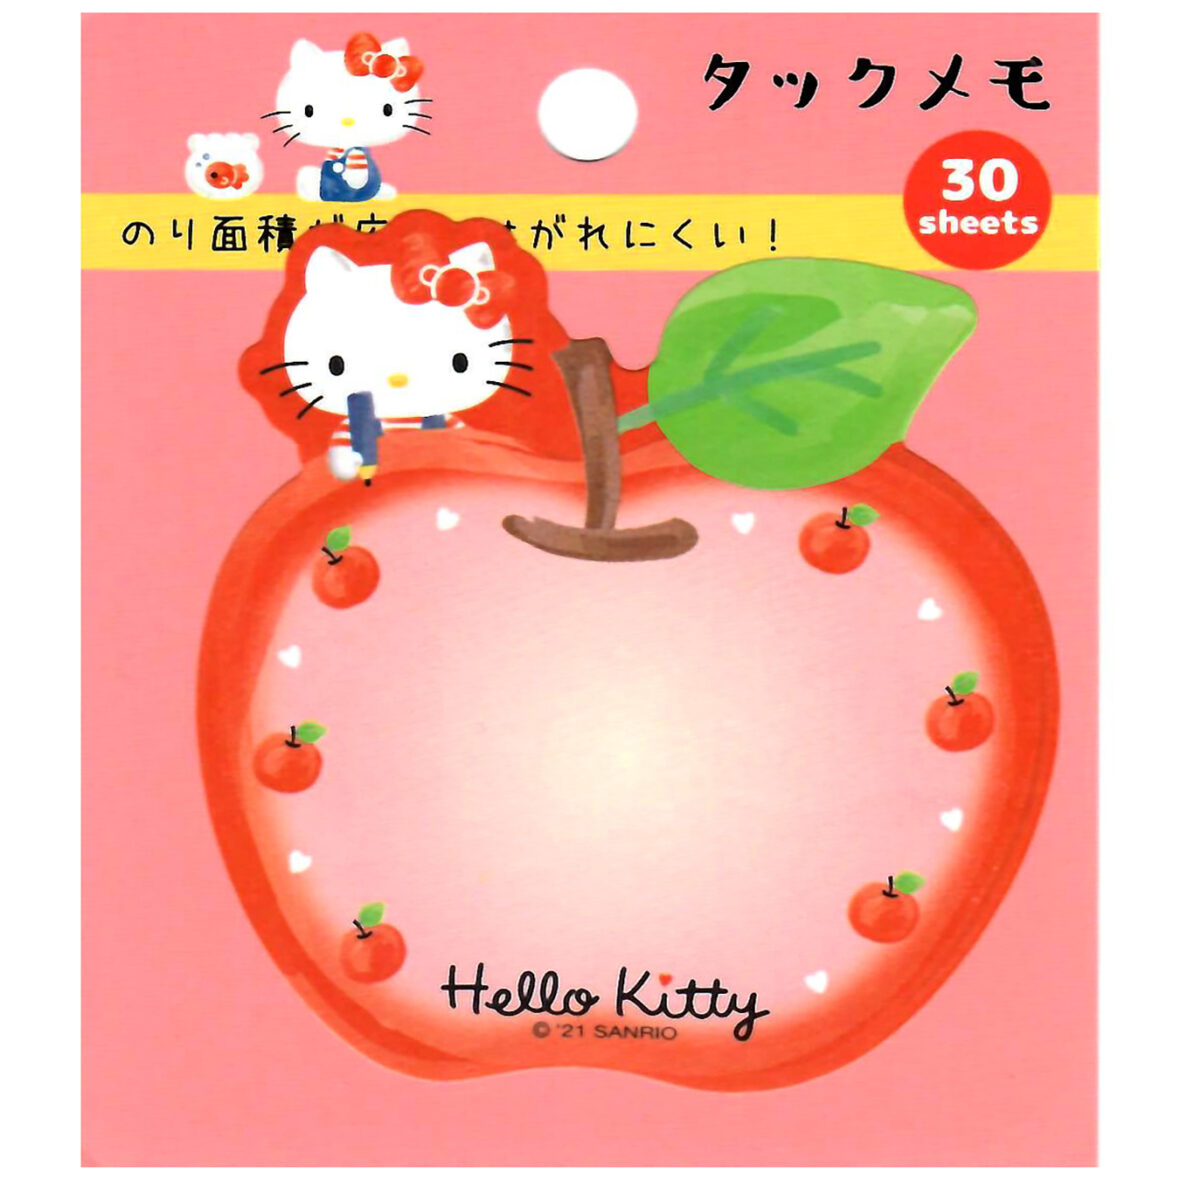 Sanrio Hello Kitty Red Apple Sticky Die-Cut Memo Pad